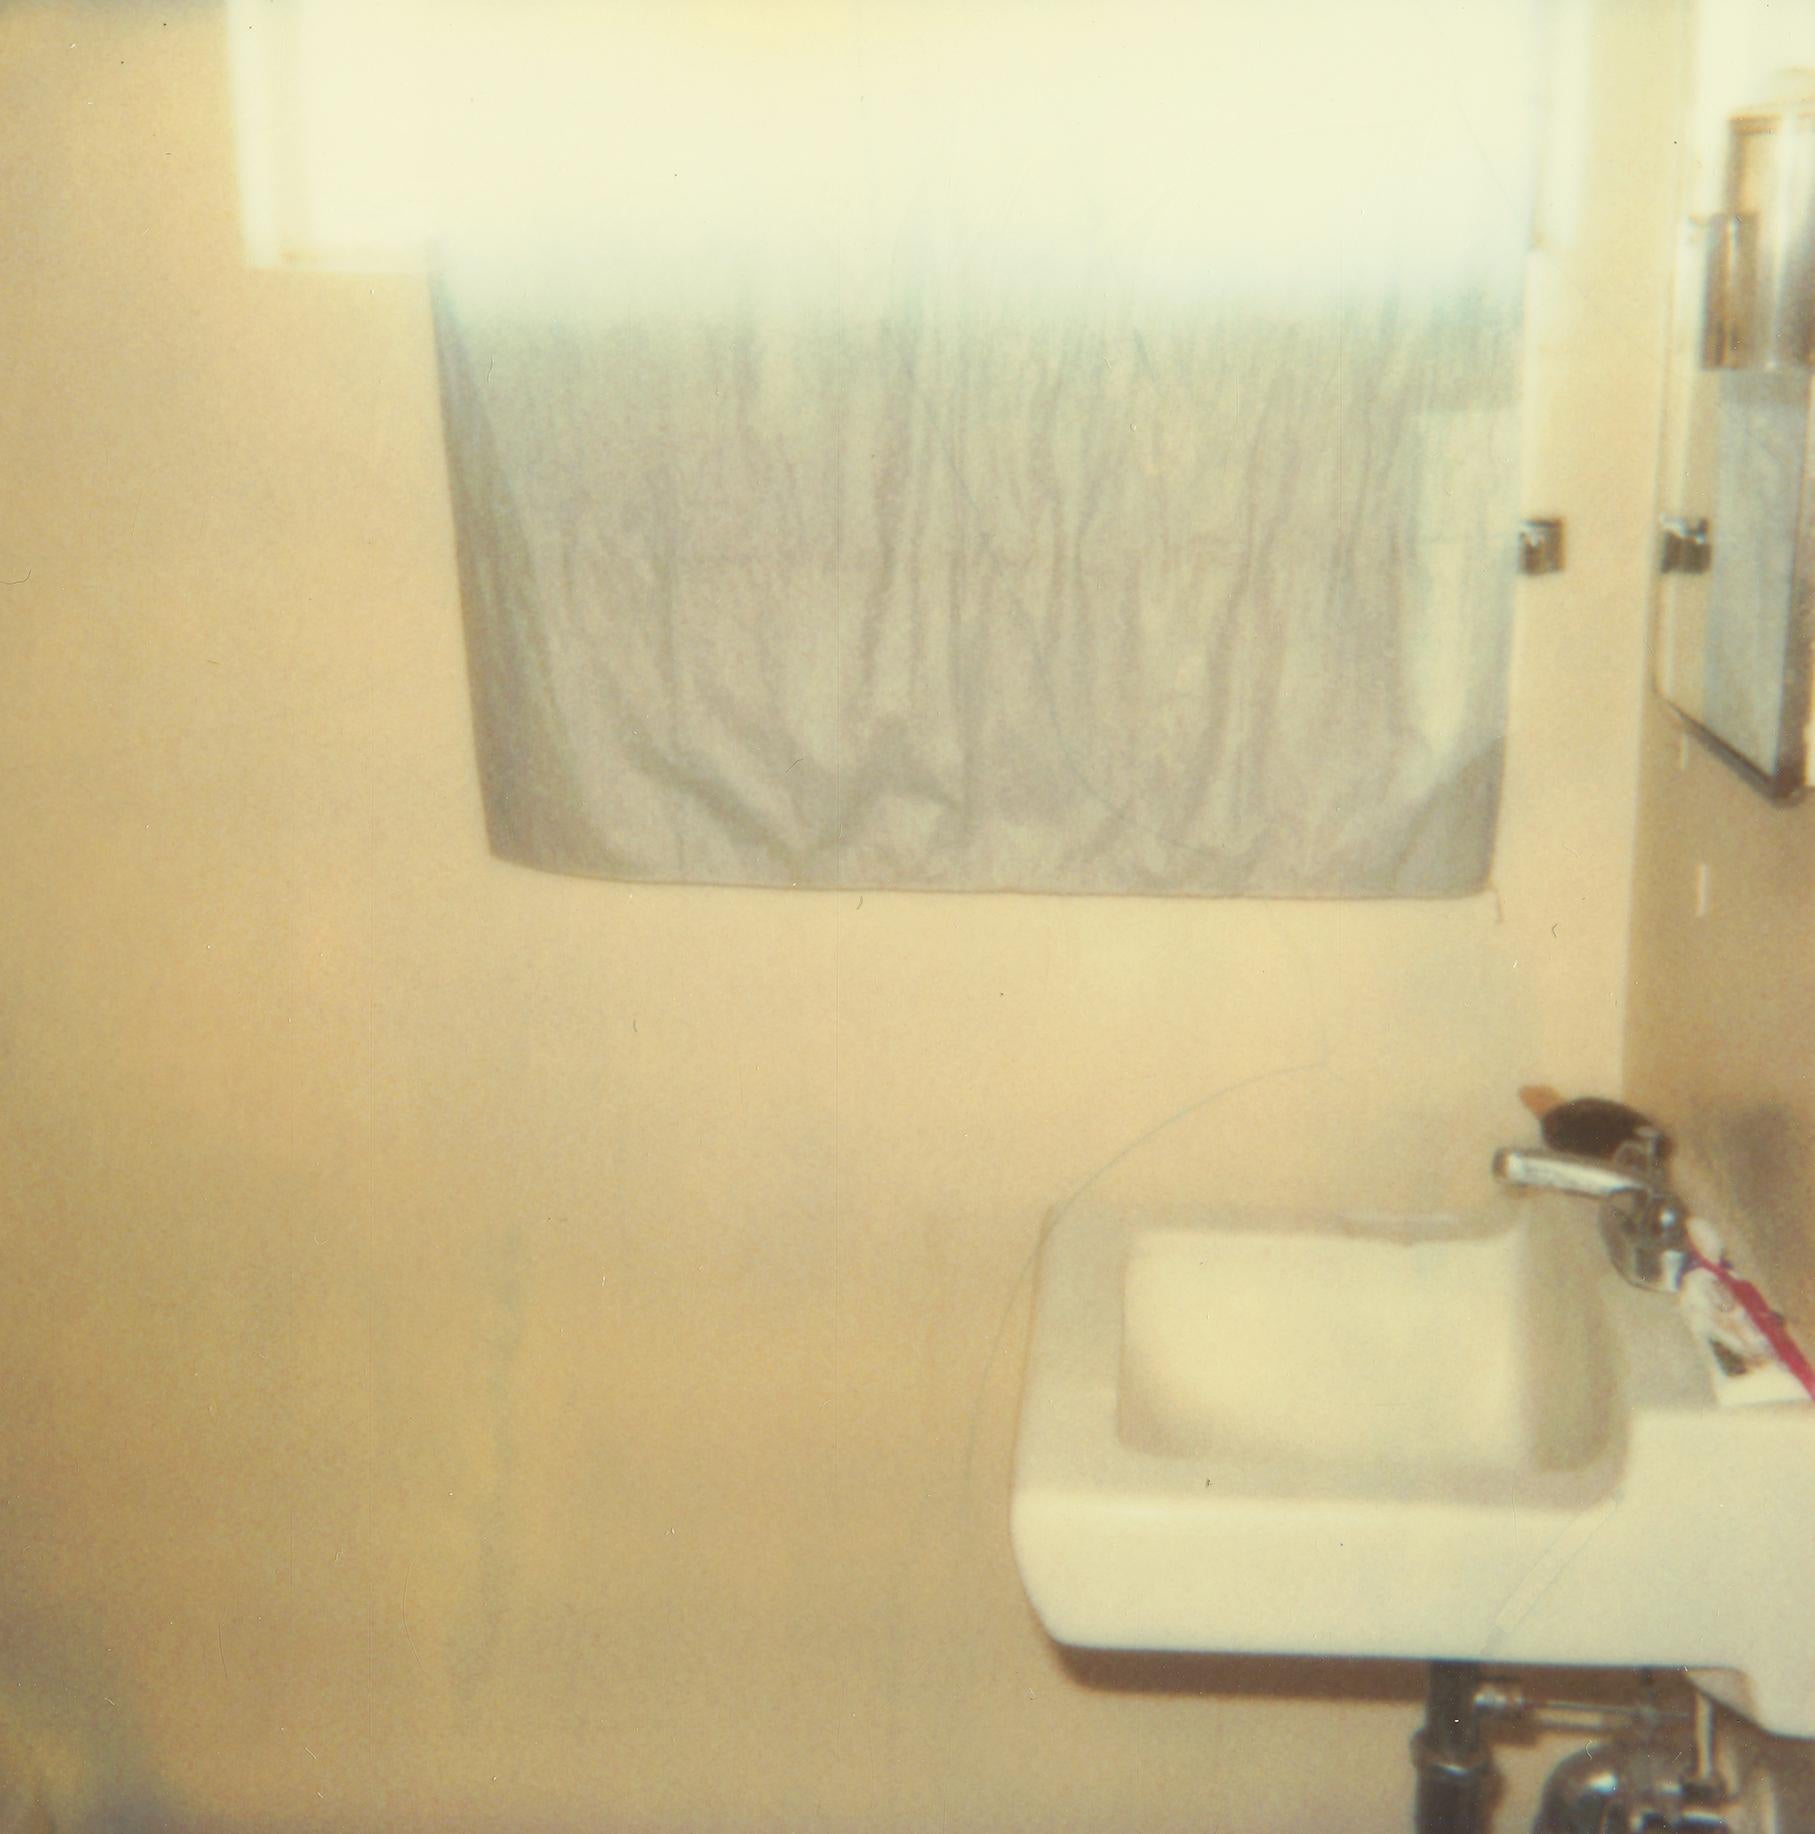 Bathroom (29 Palms, CA) - Polaroid, Contemporary - Photograph by Stefanie Schneider